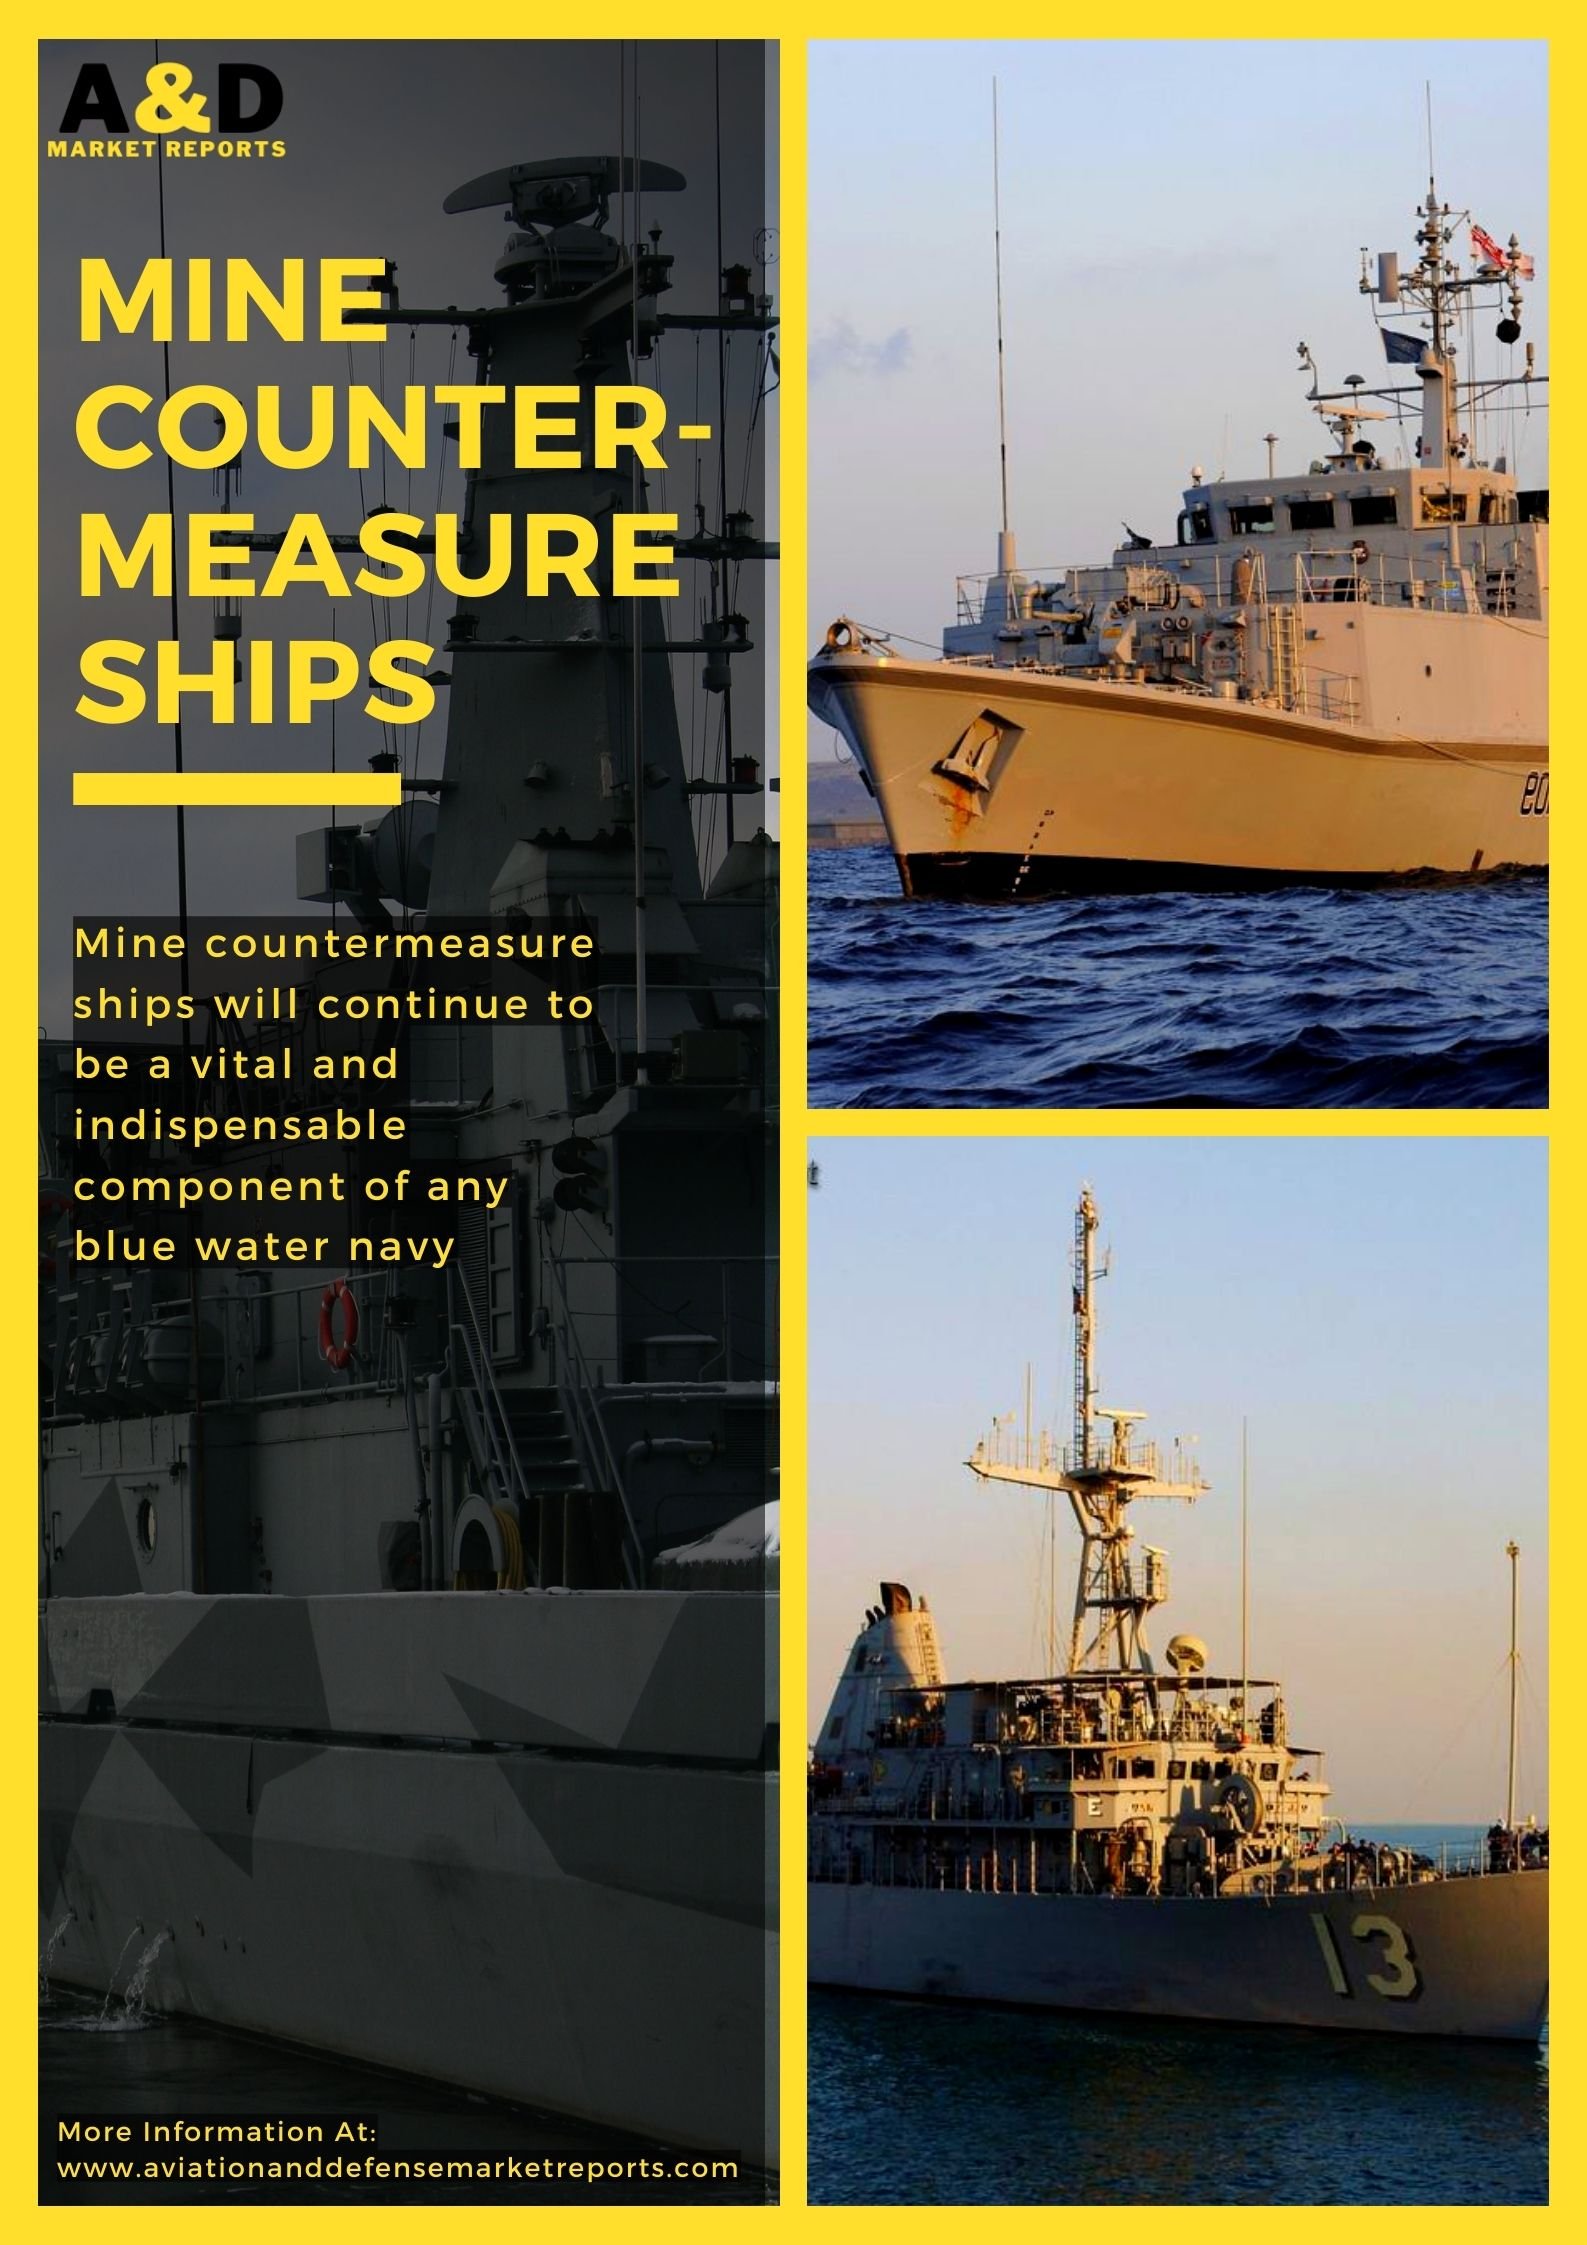 Mine Counter Measure Ships are Vital for Fleet Survivabilty